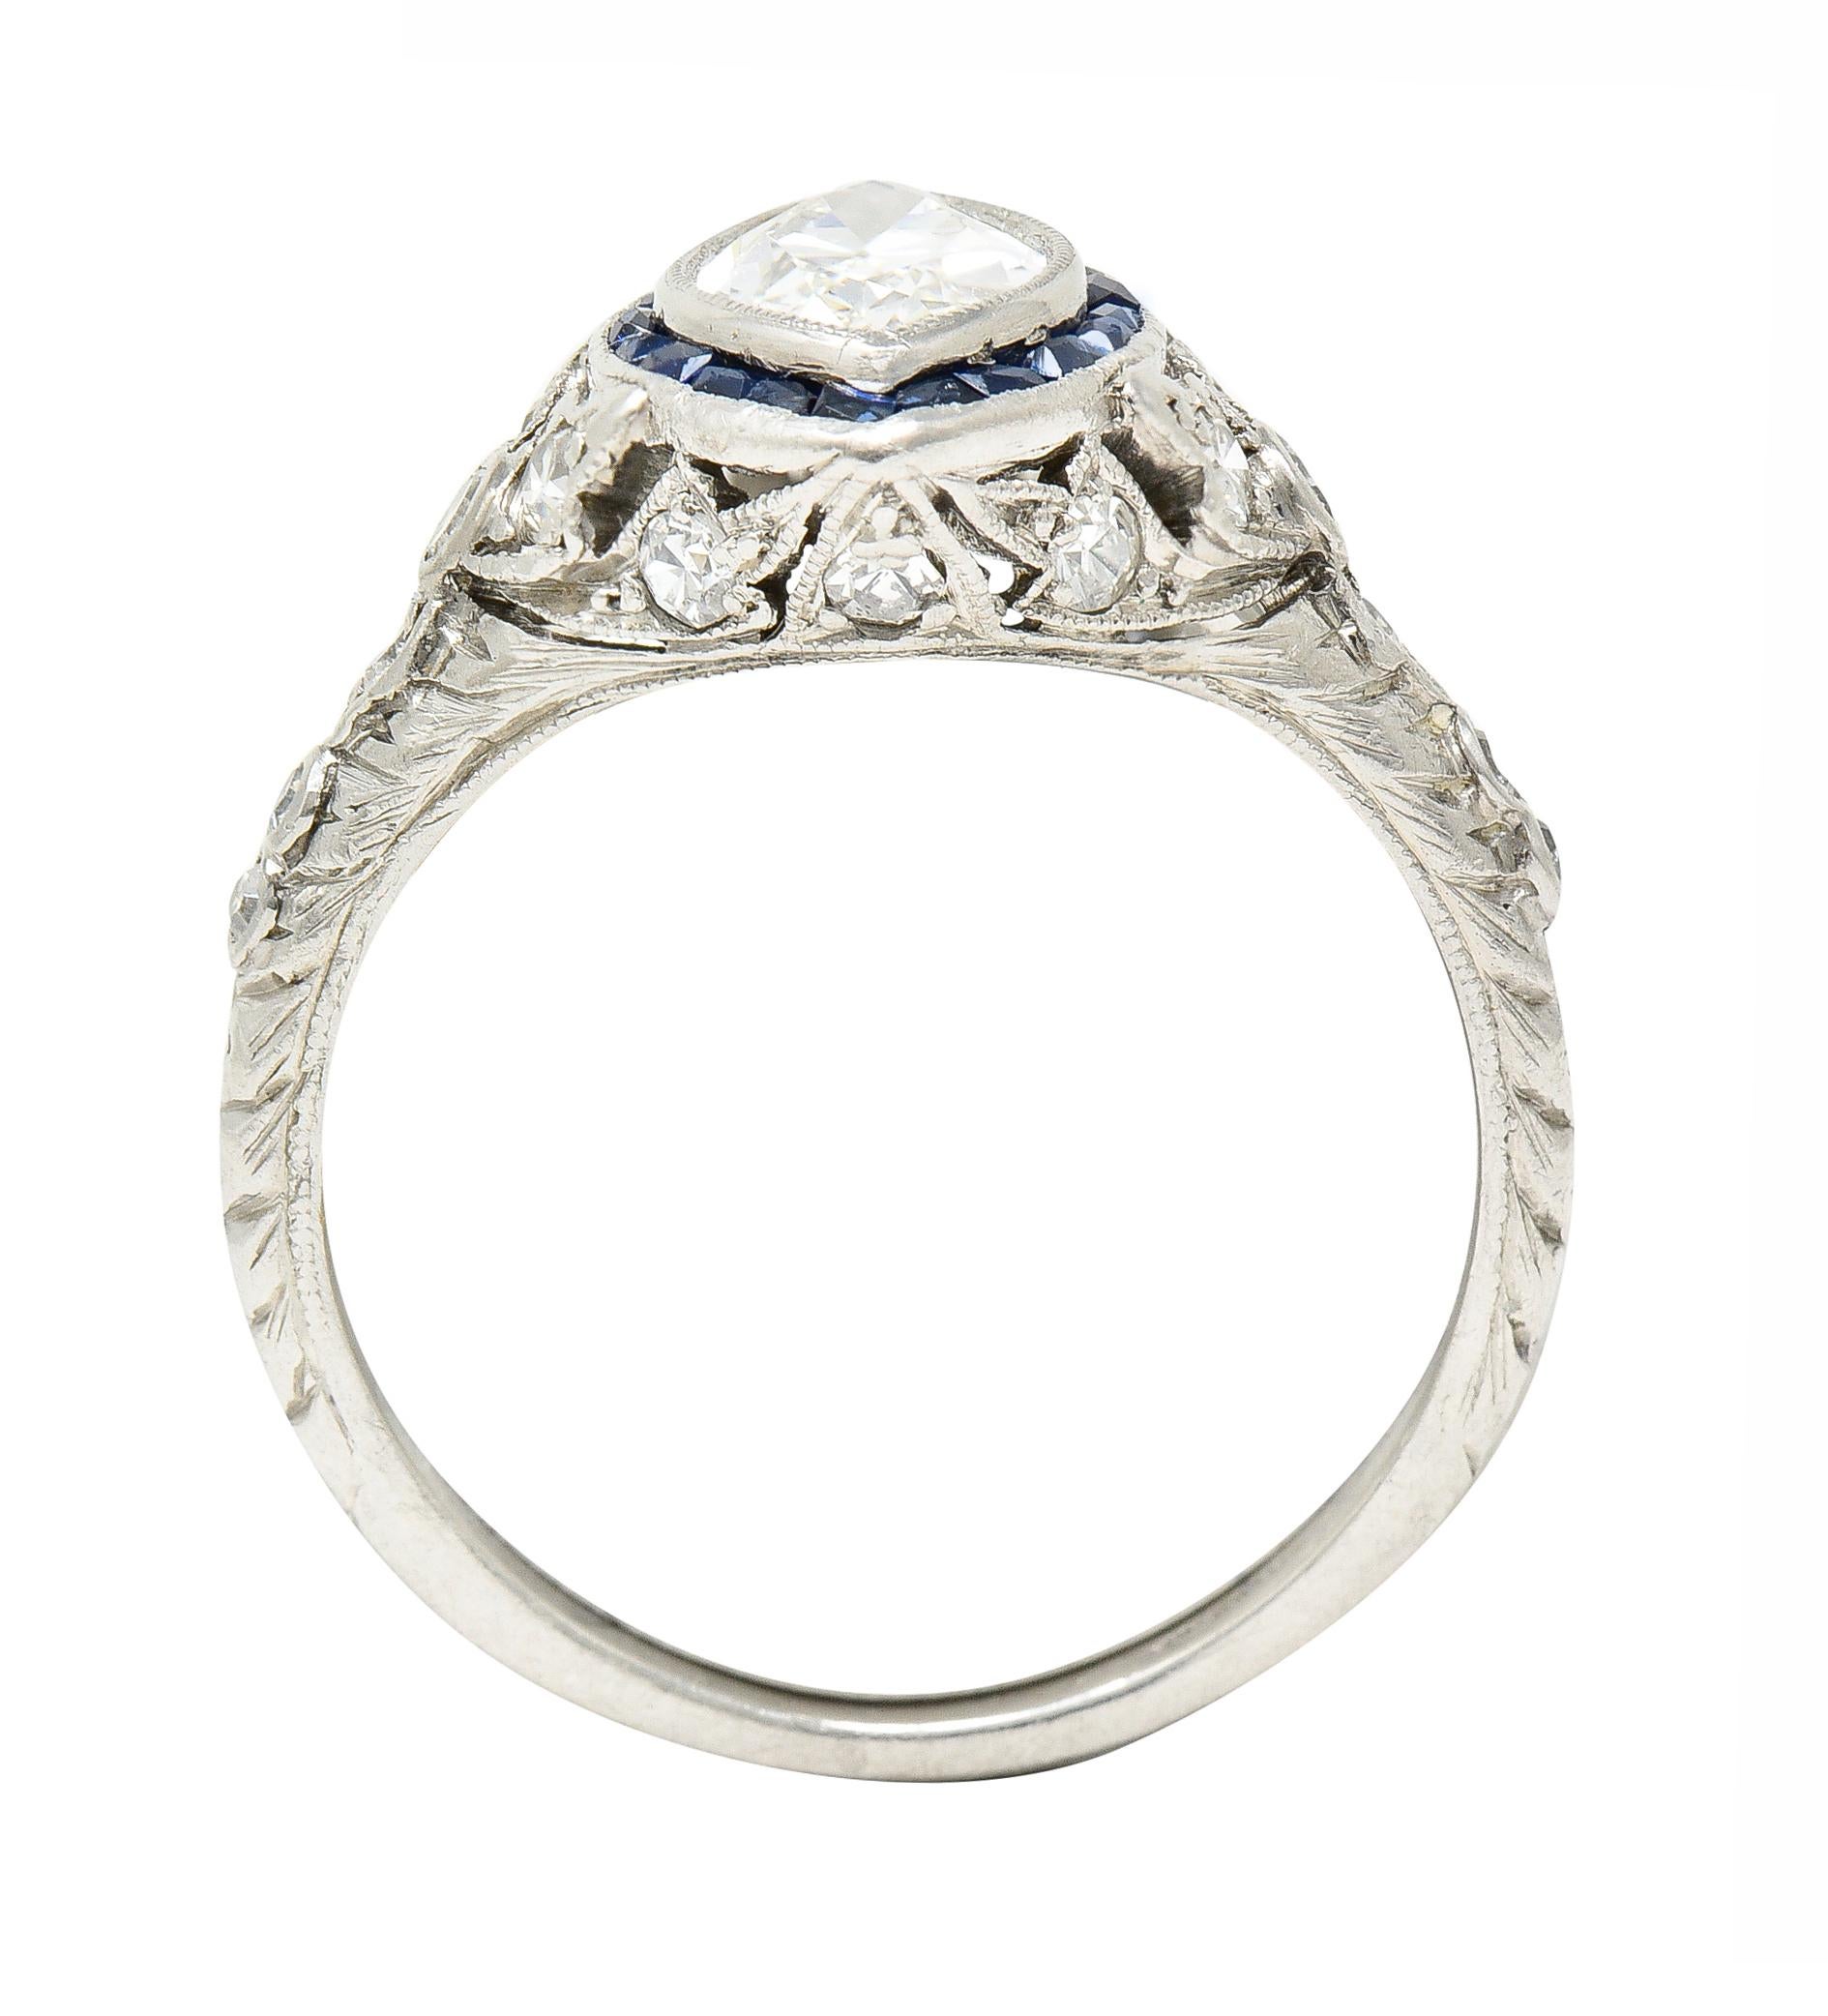 Katz & Ogush Inc. Art Deco 1.88 Carats Marquise Cut Diamond Sapphire Ring 4